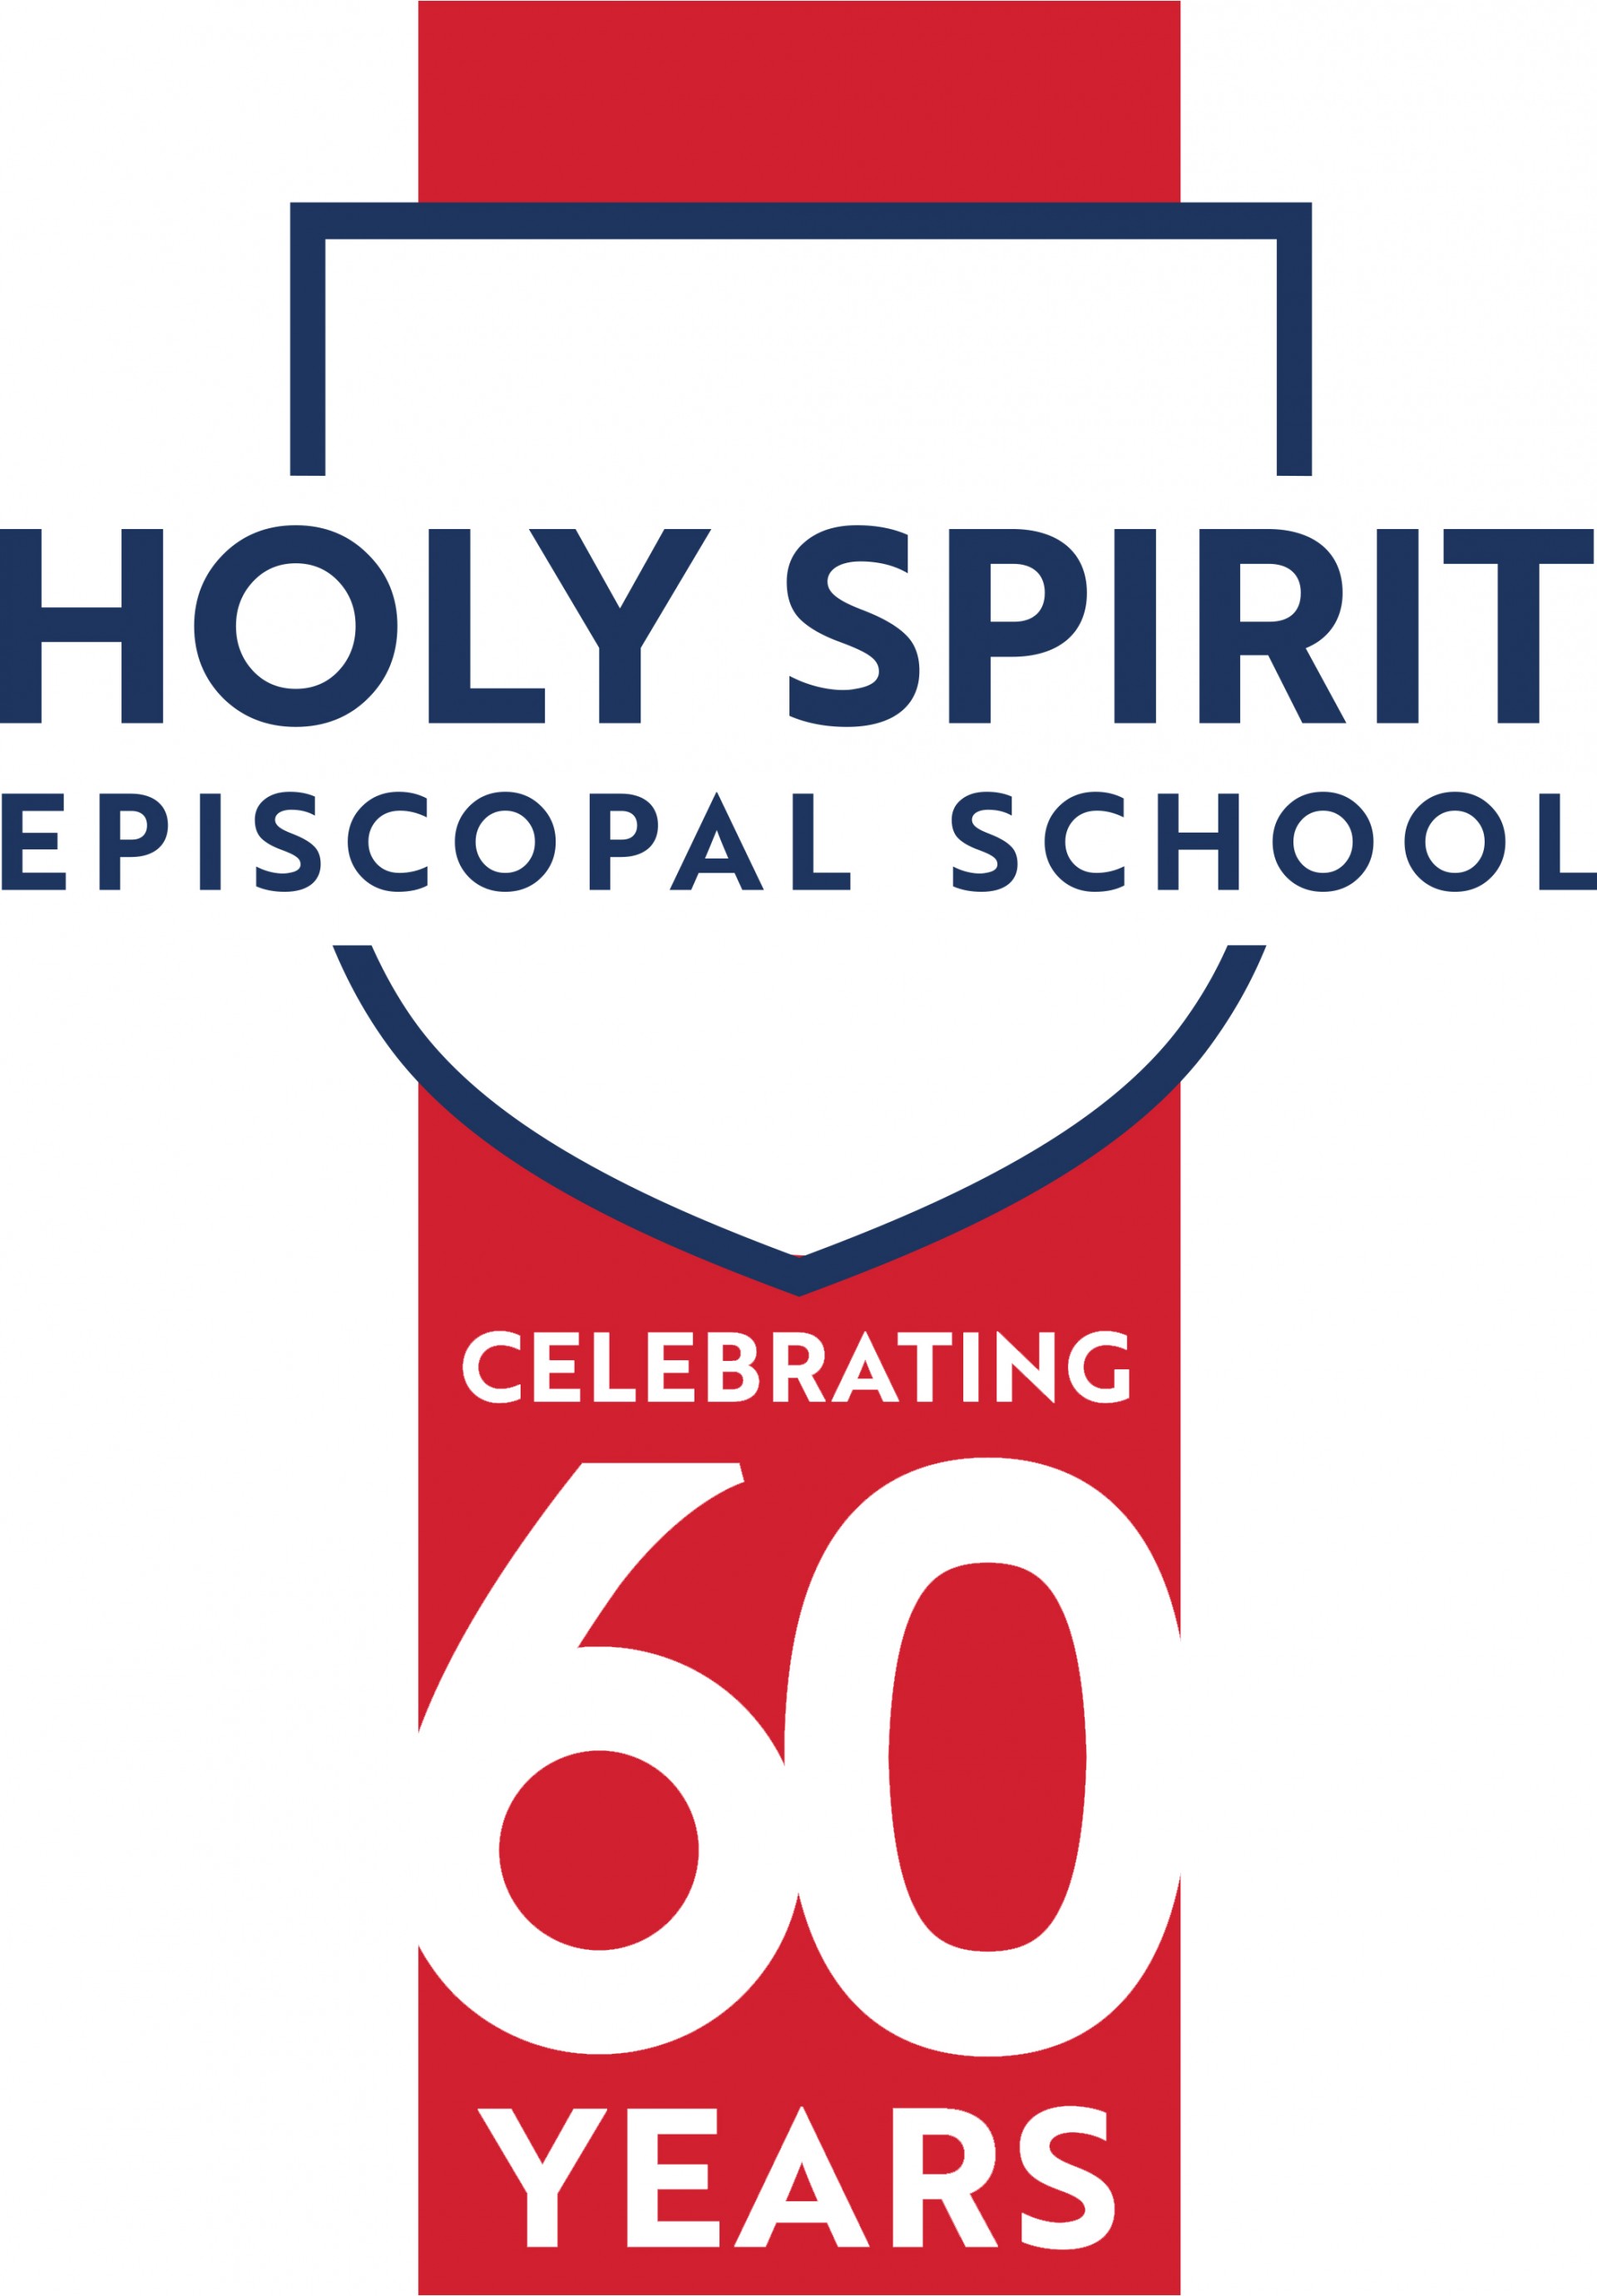 Holy Spirit Episcopal School Celebrating 60 years logo